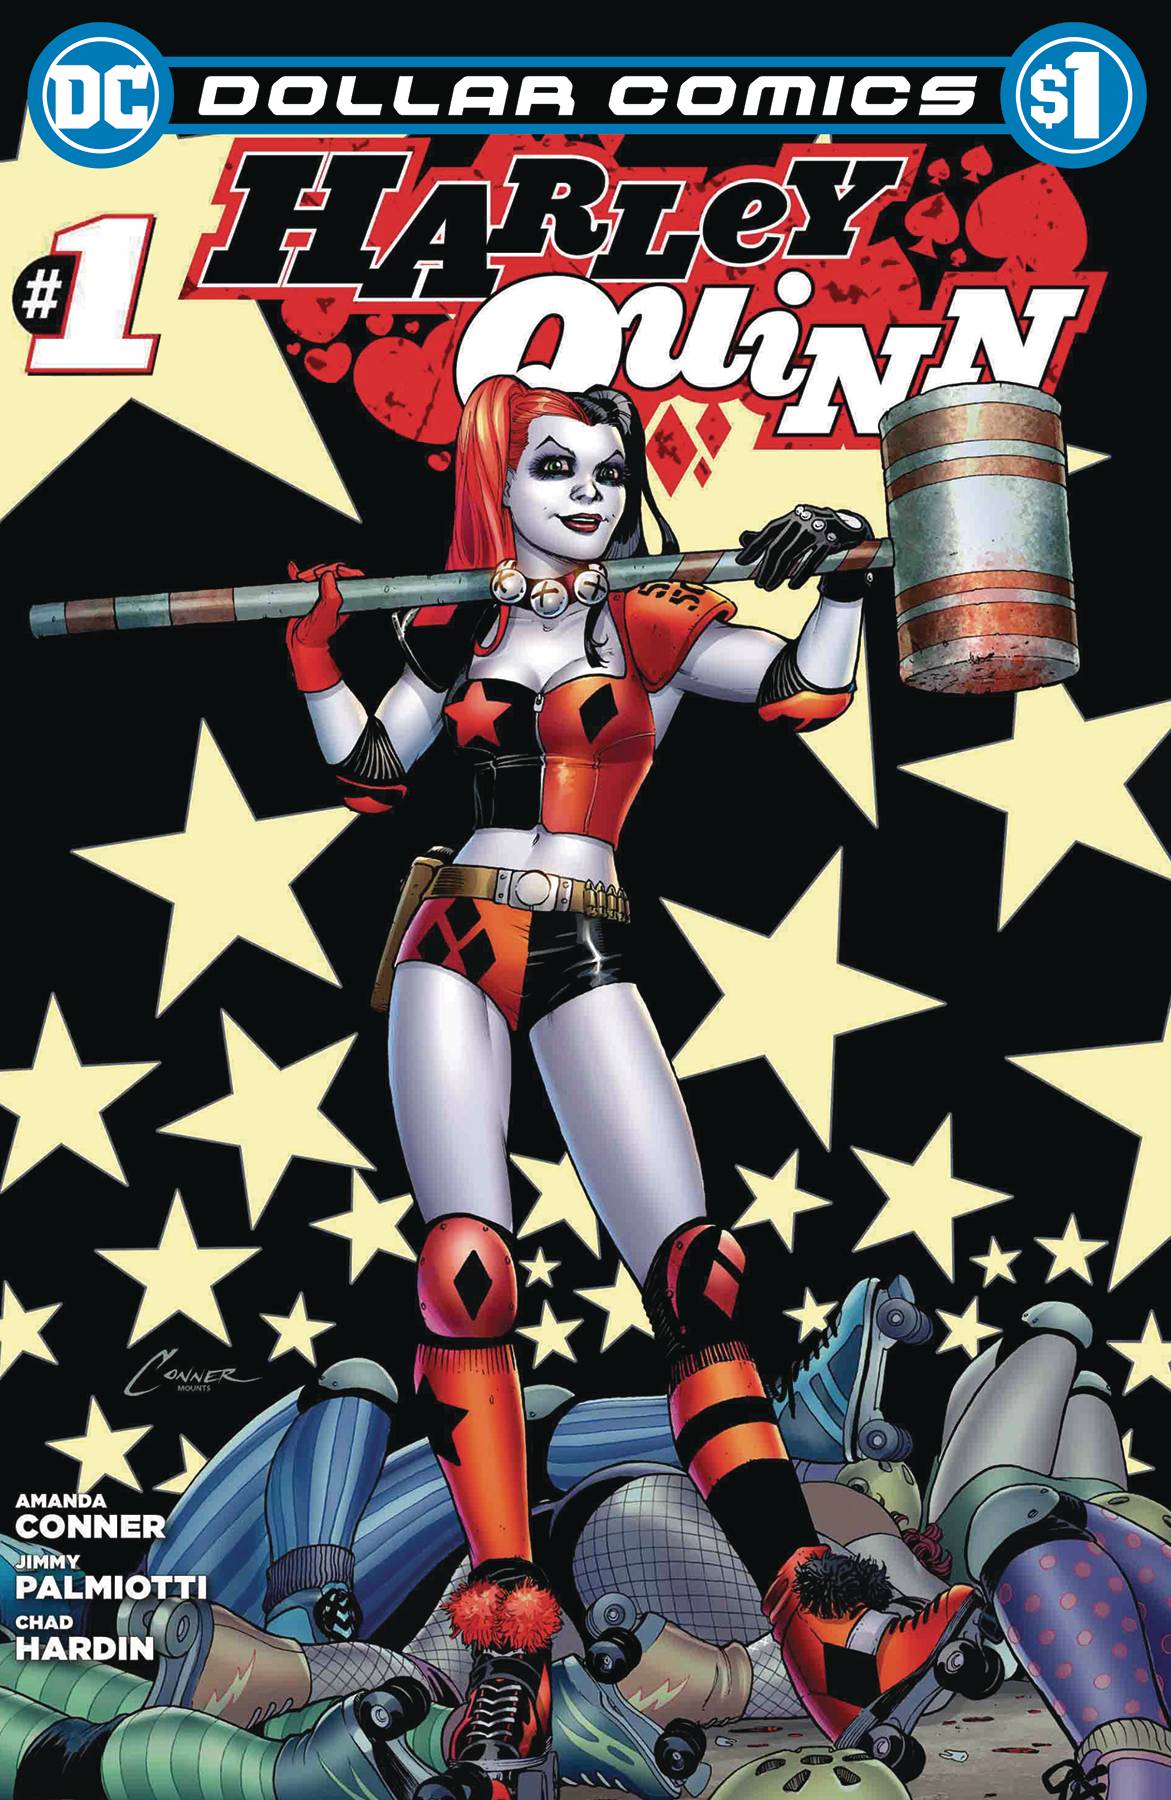 Dollar Comics Harley Quinn #1